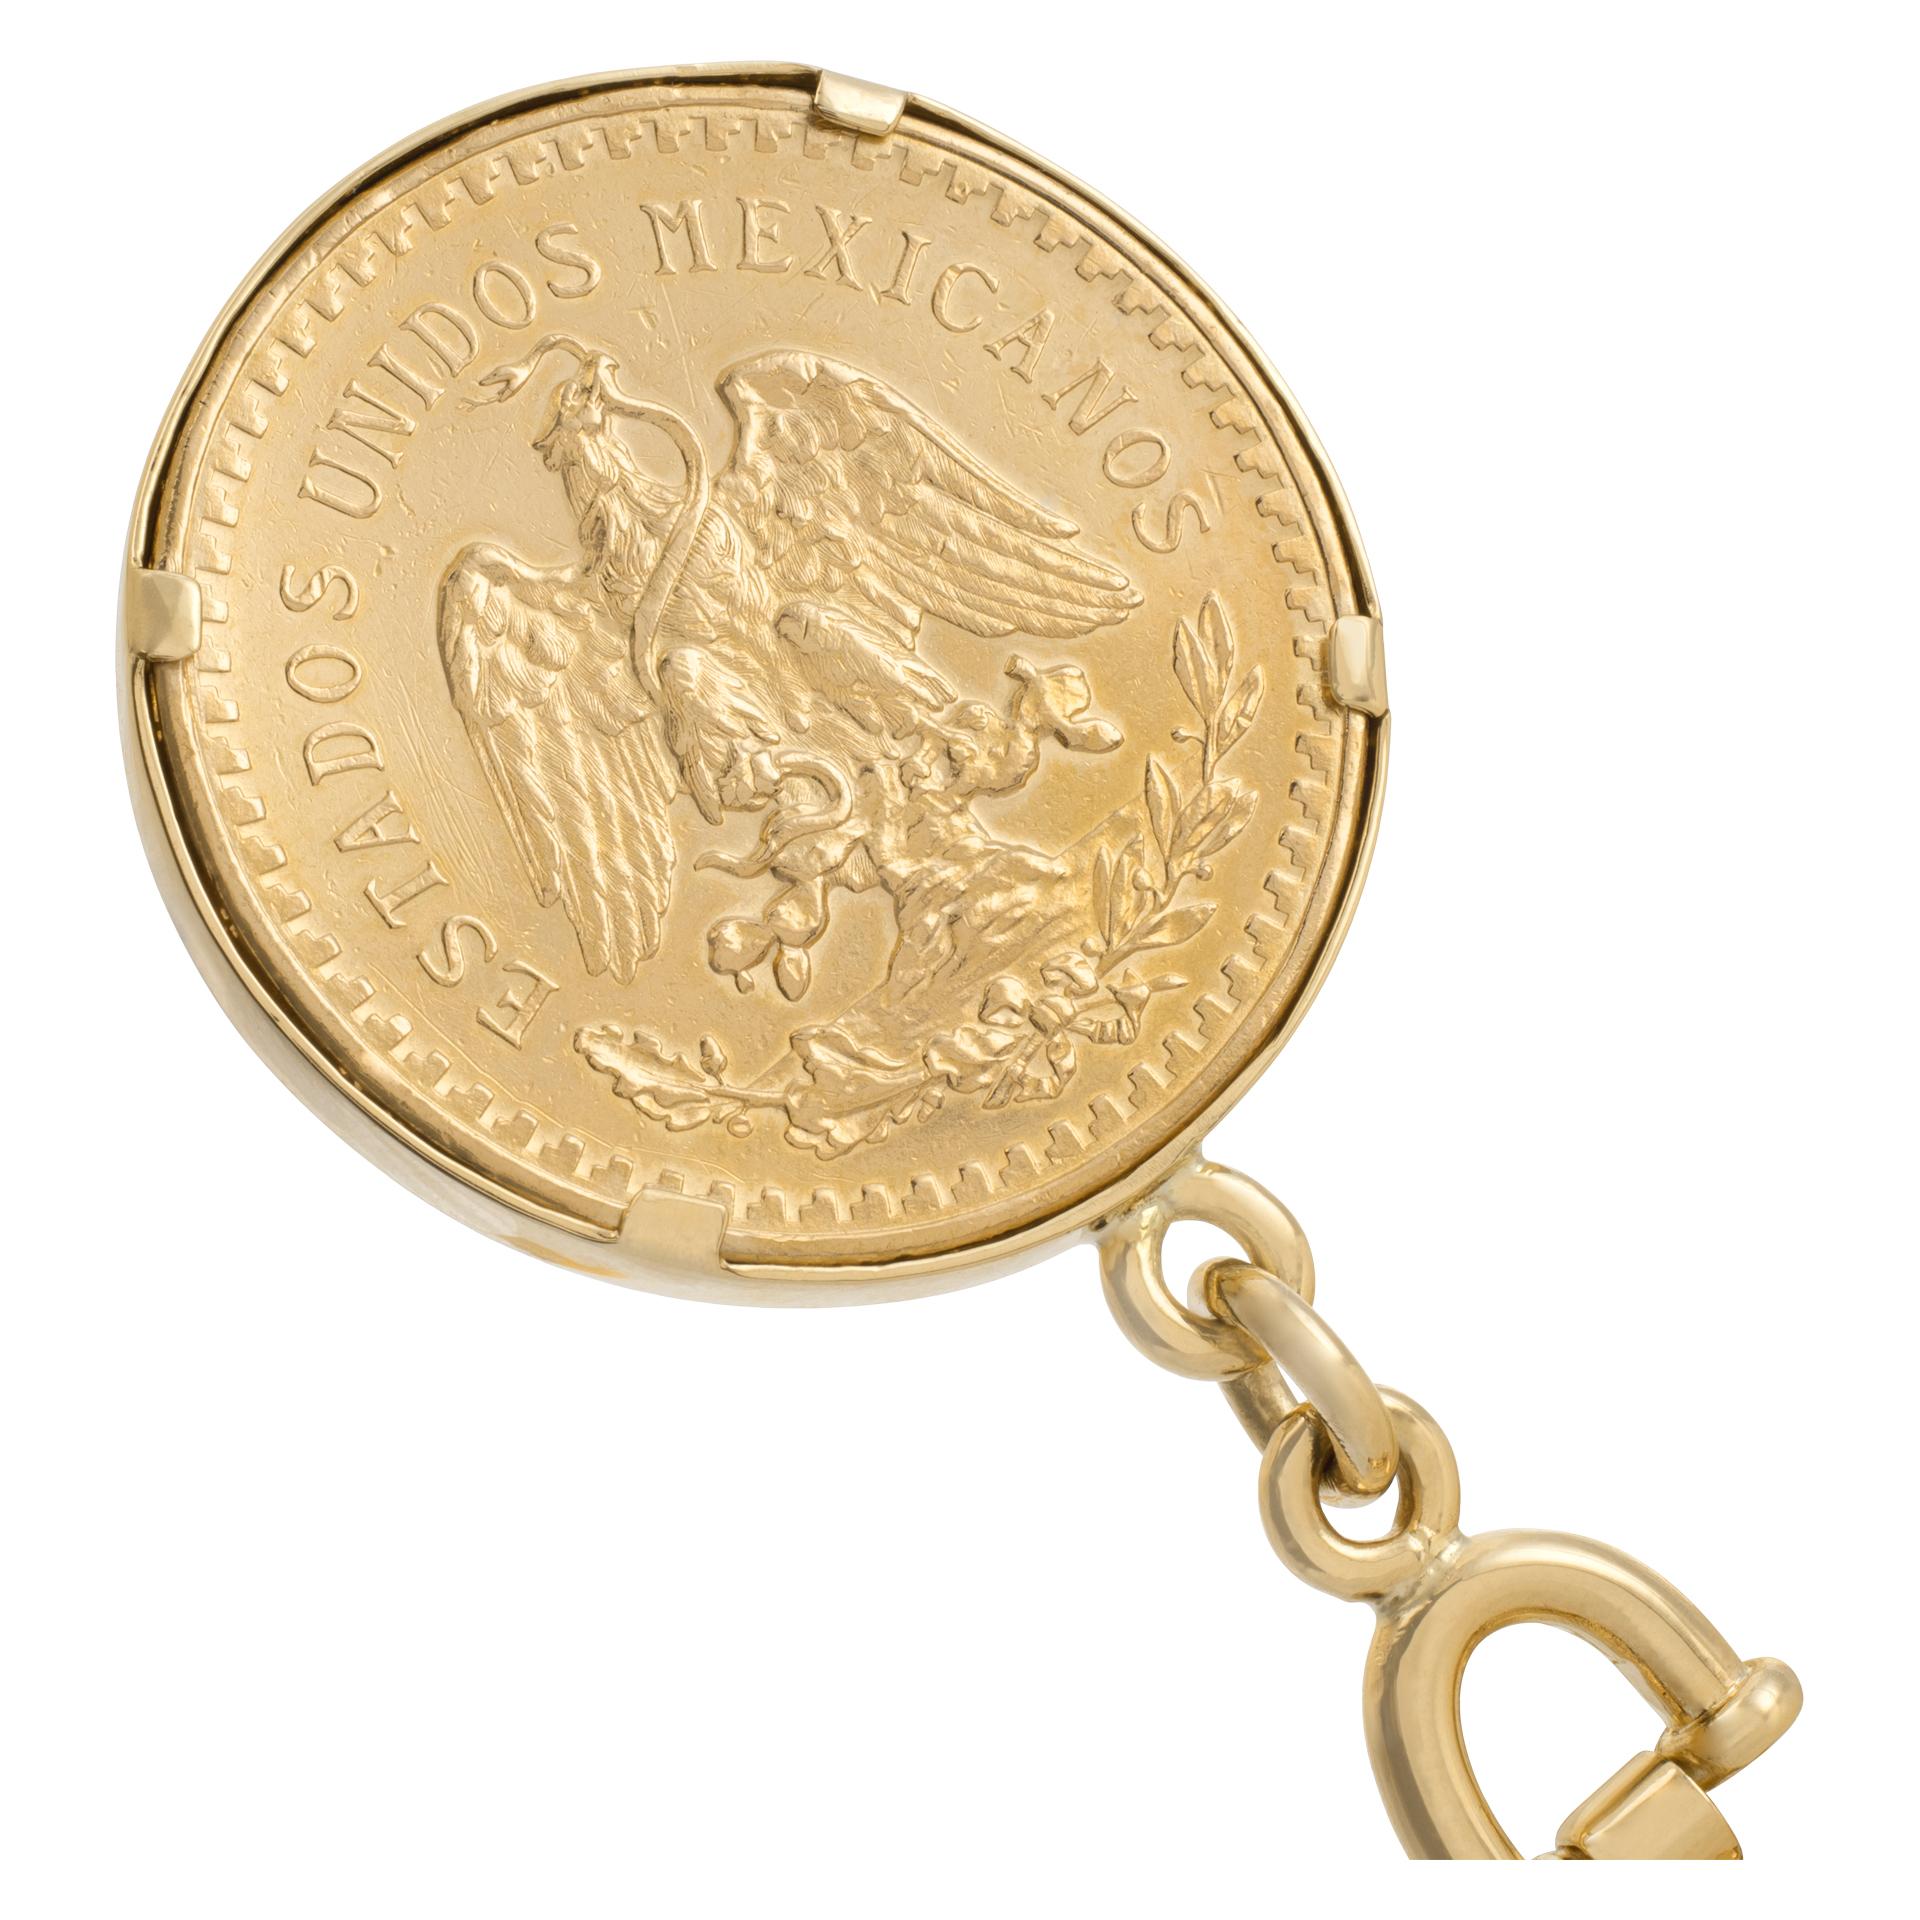 50 peso gold ring